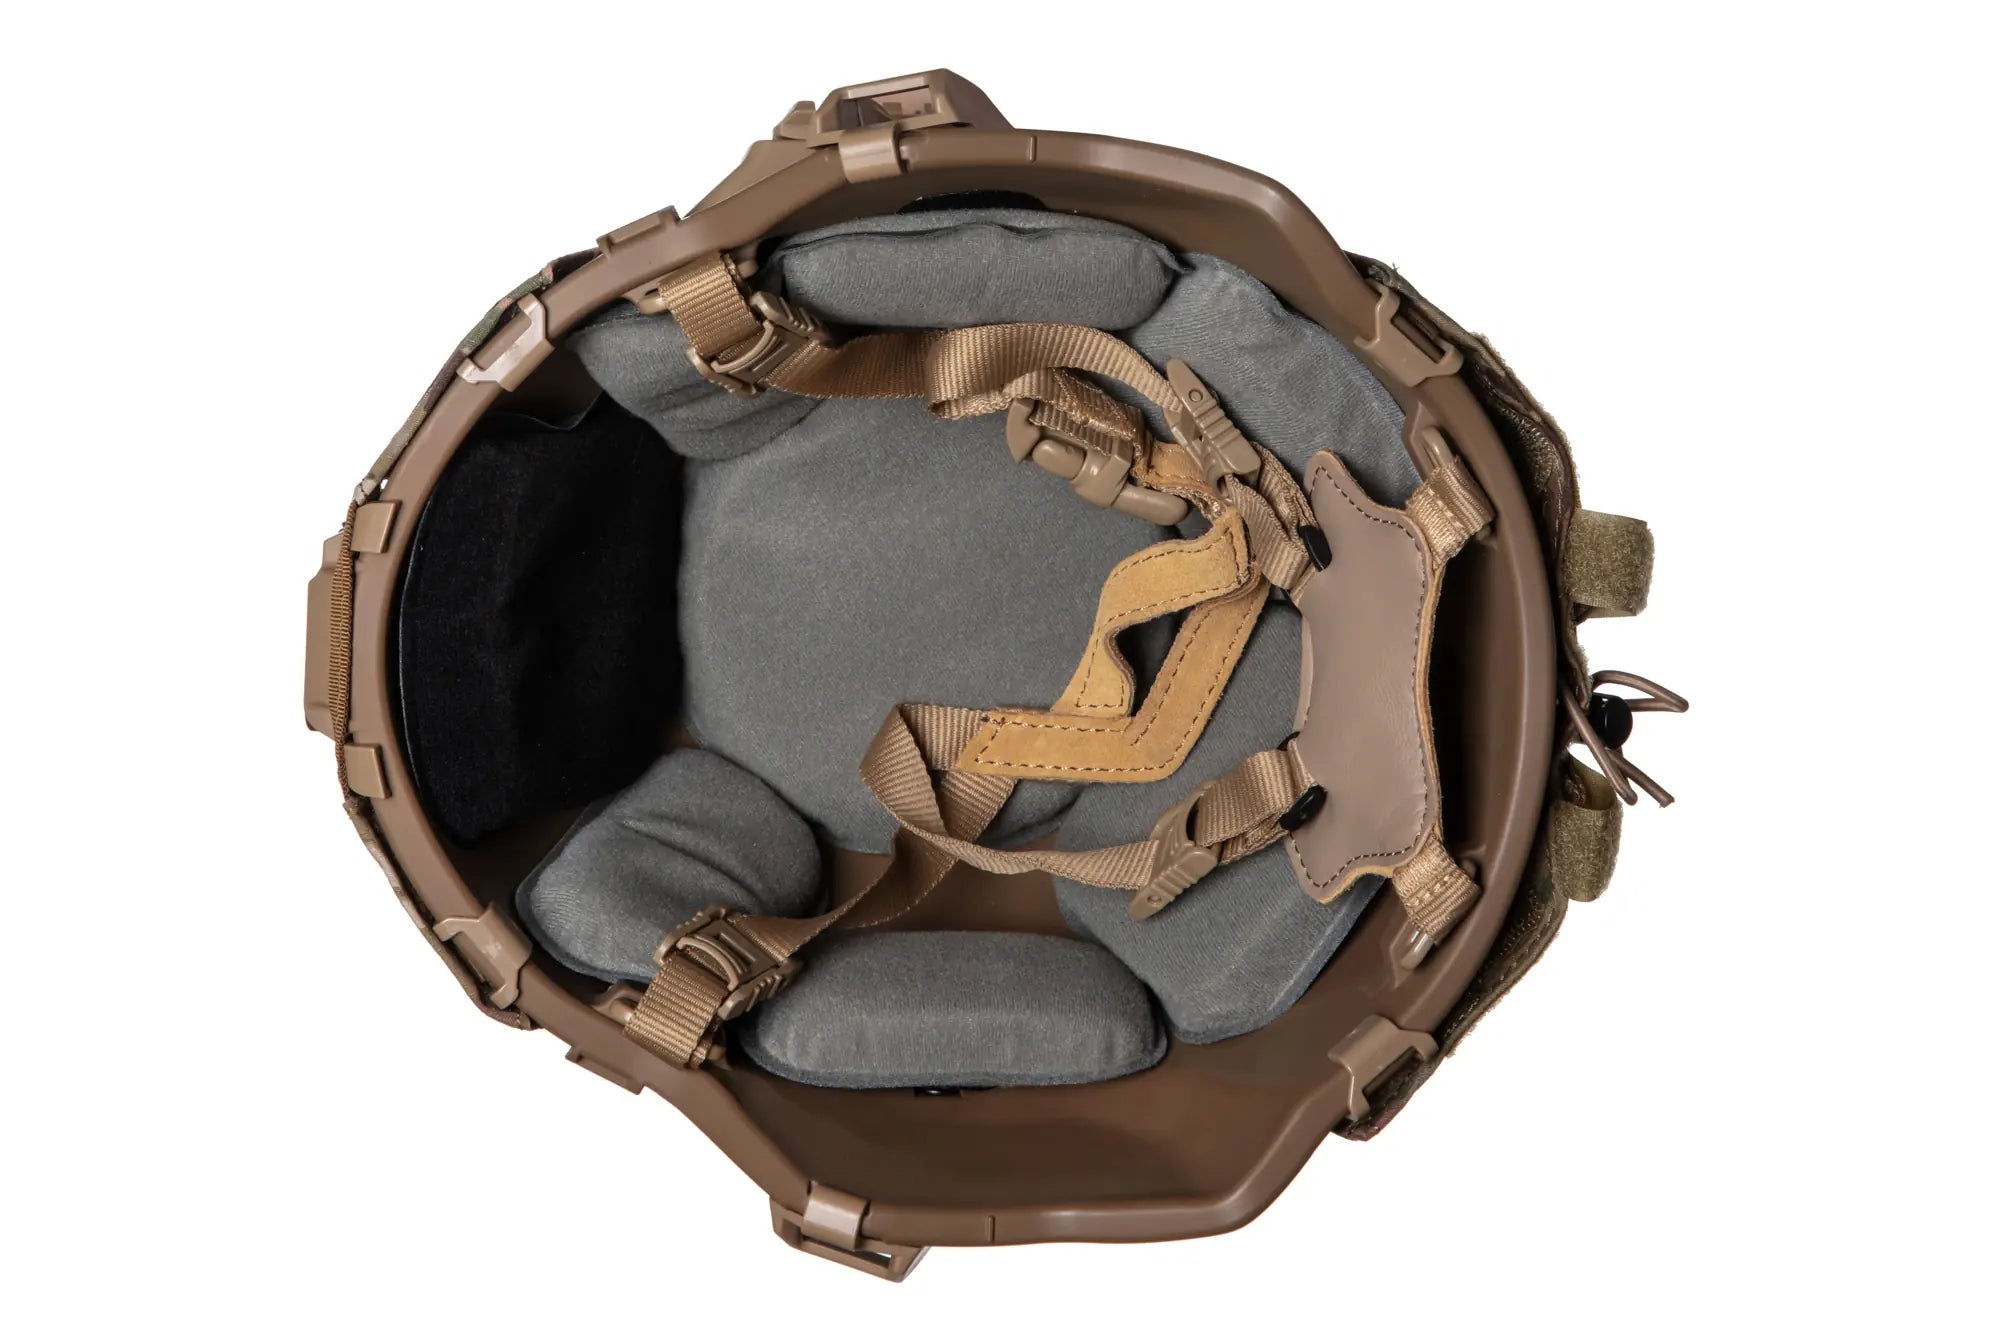 Replica helmet FMA Integrated Head Protection System Multicam-6